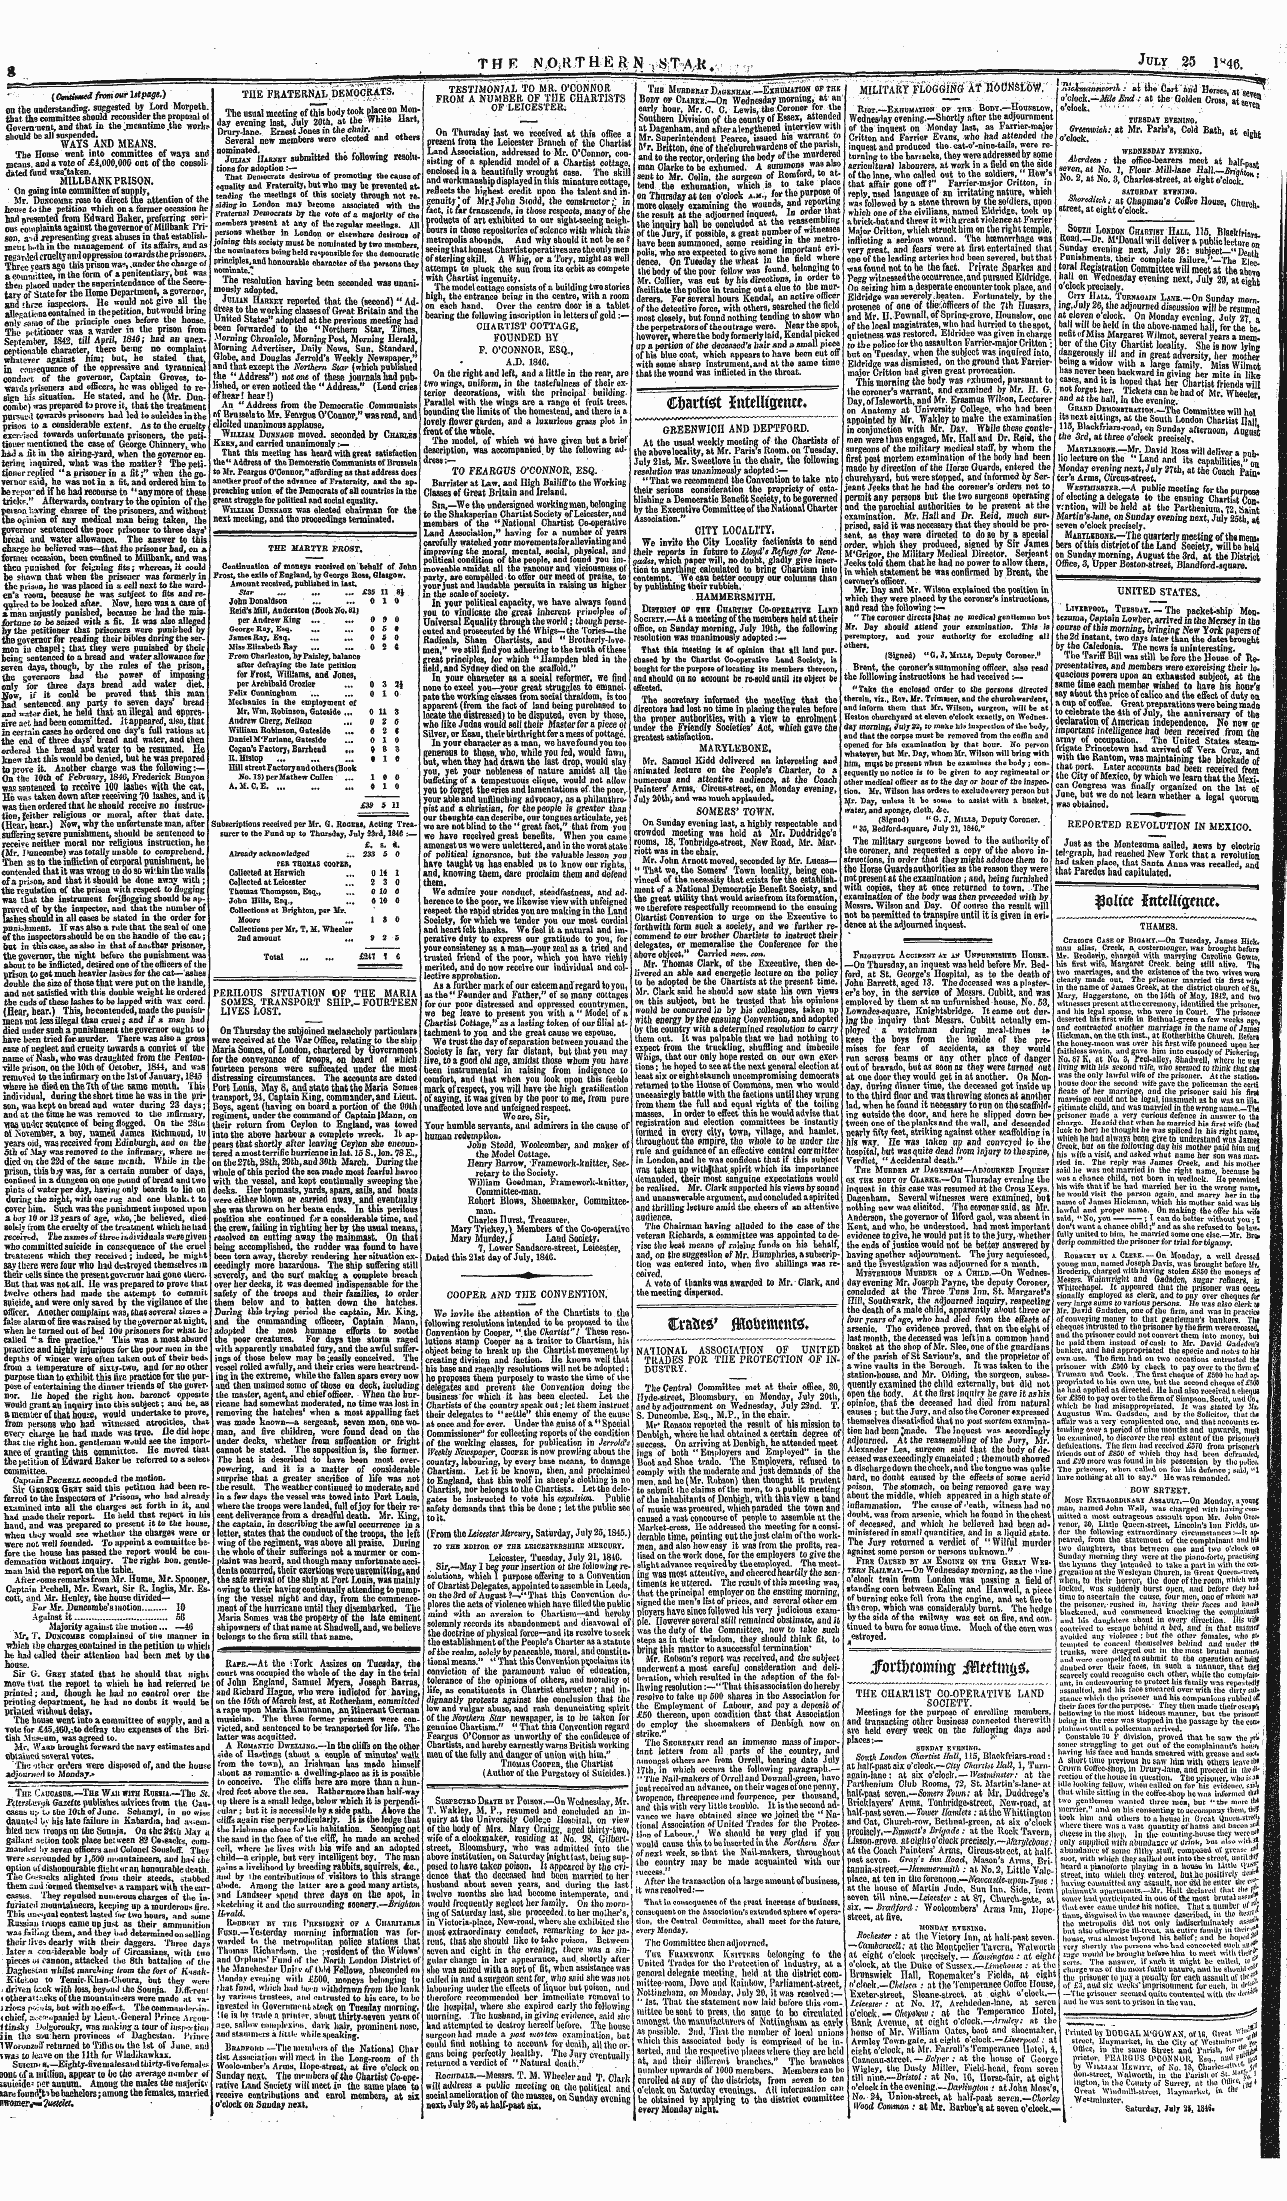 Northern Star (1837-1852): jS F Y, 3rd edition - Fmohtfur, Accreent A-R At* Unfcmmhshen H...